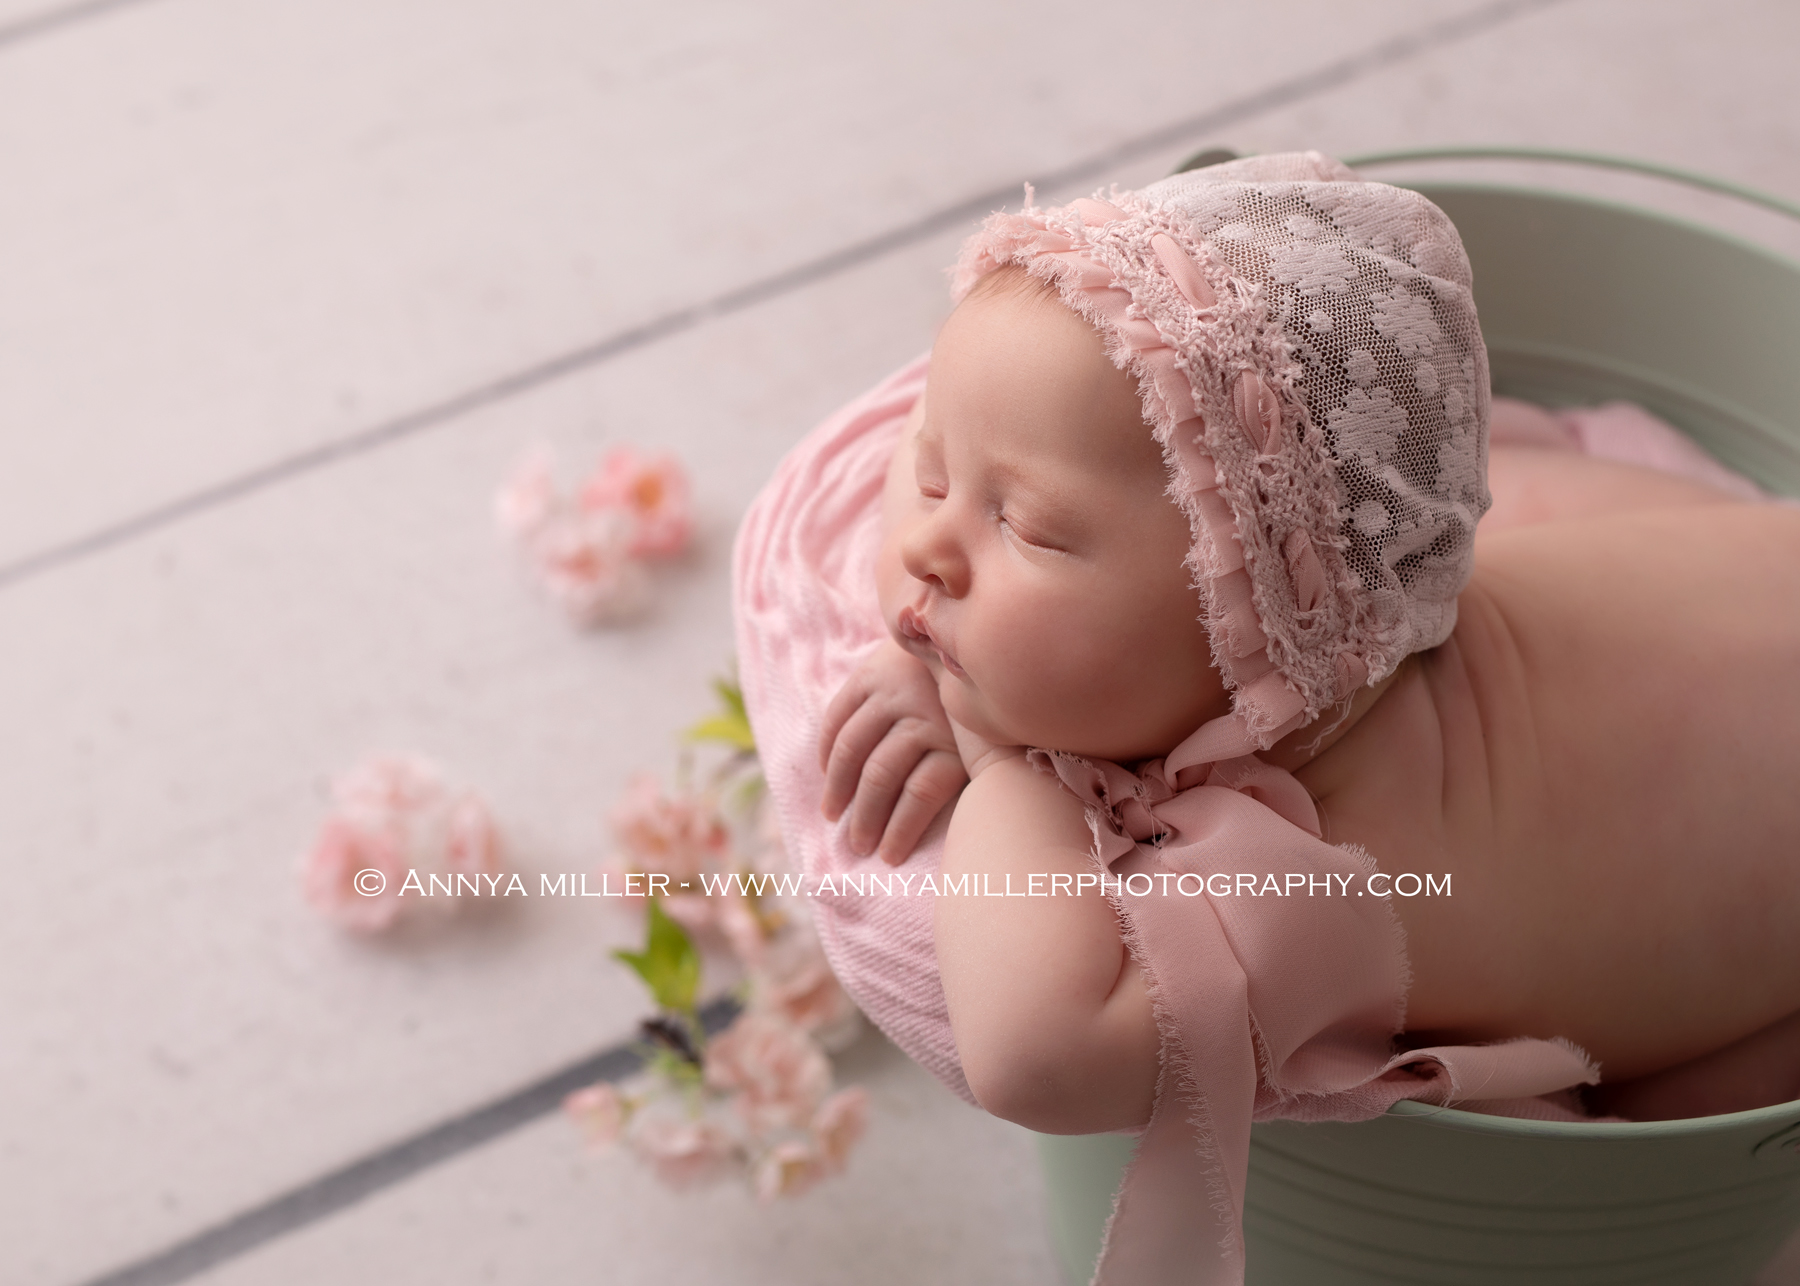 Portraits of brand new baby girl by Ajax newborn photographer Annya Miller 